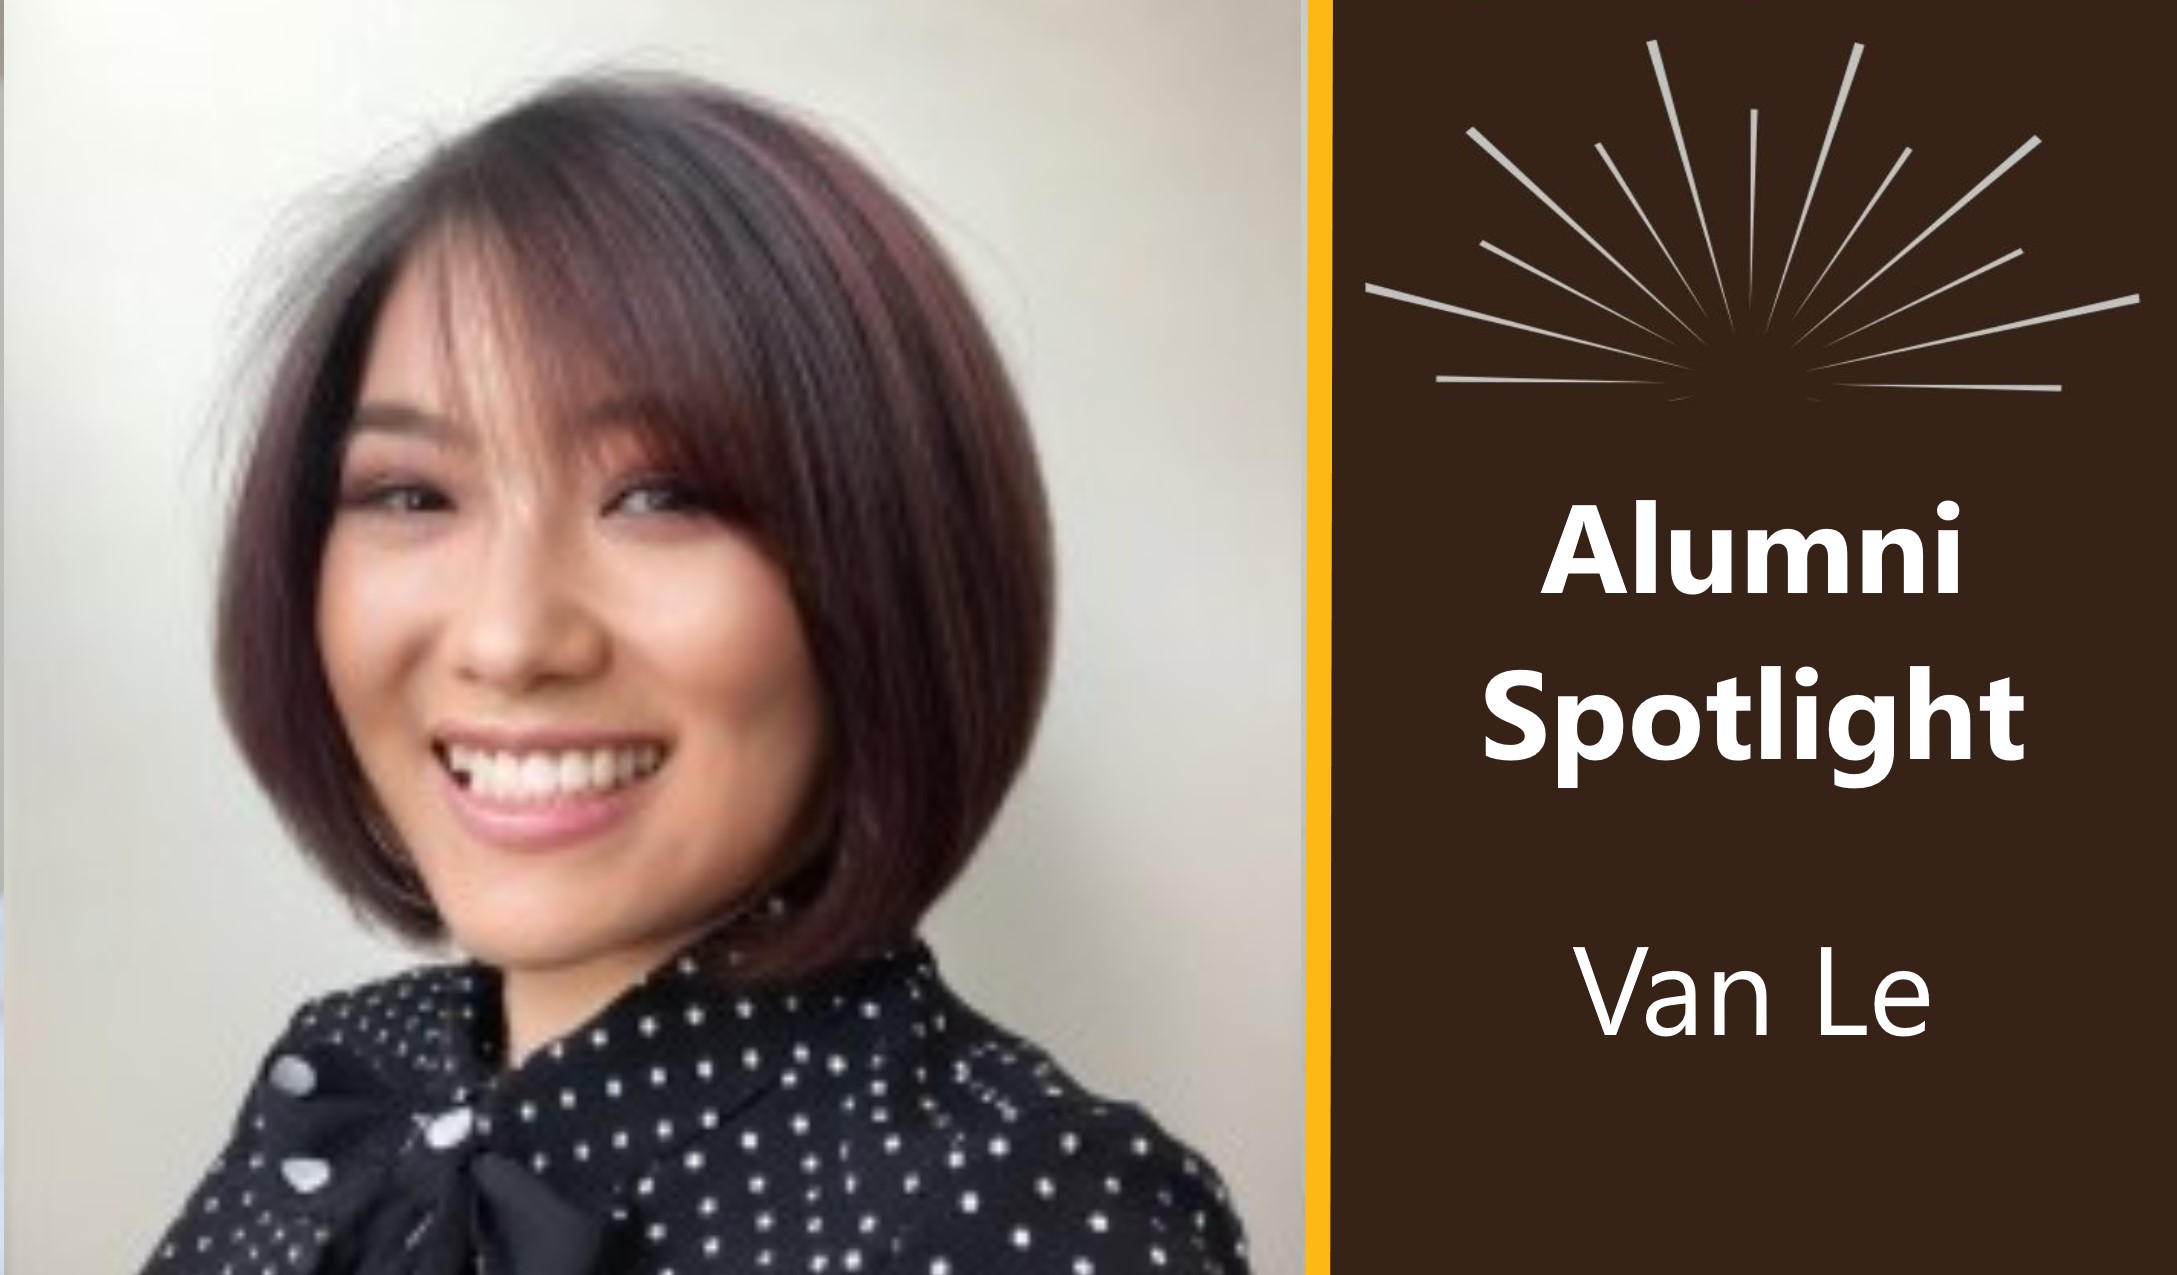 Alumni Spotlight - Van Le